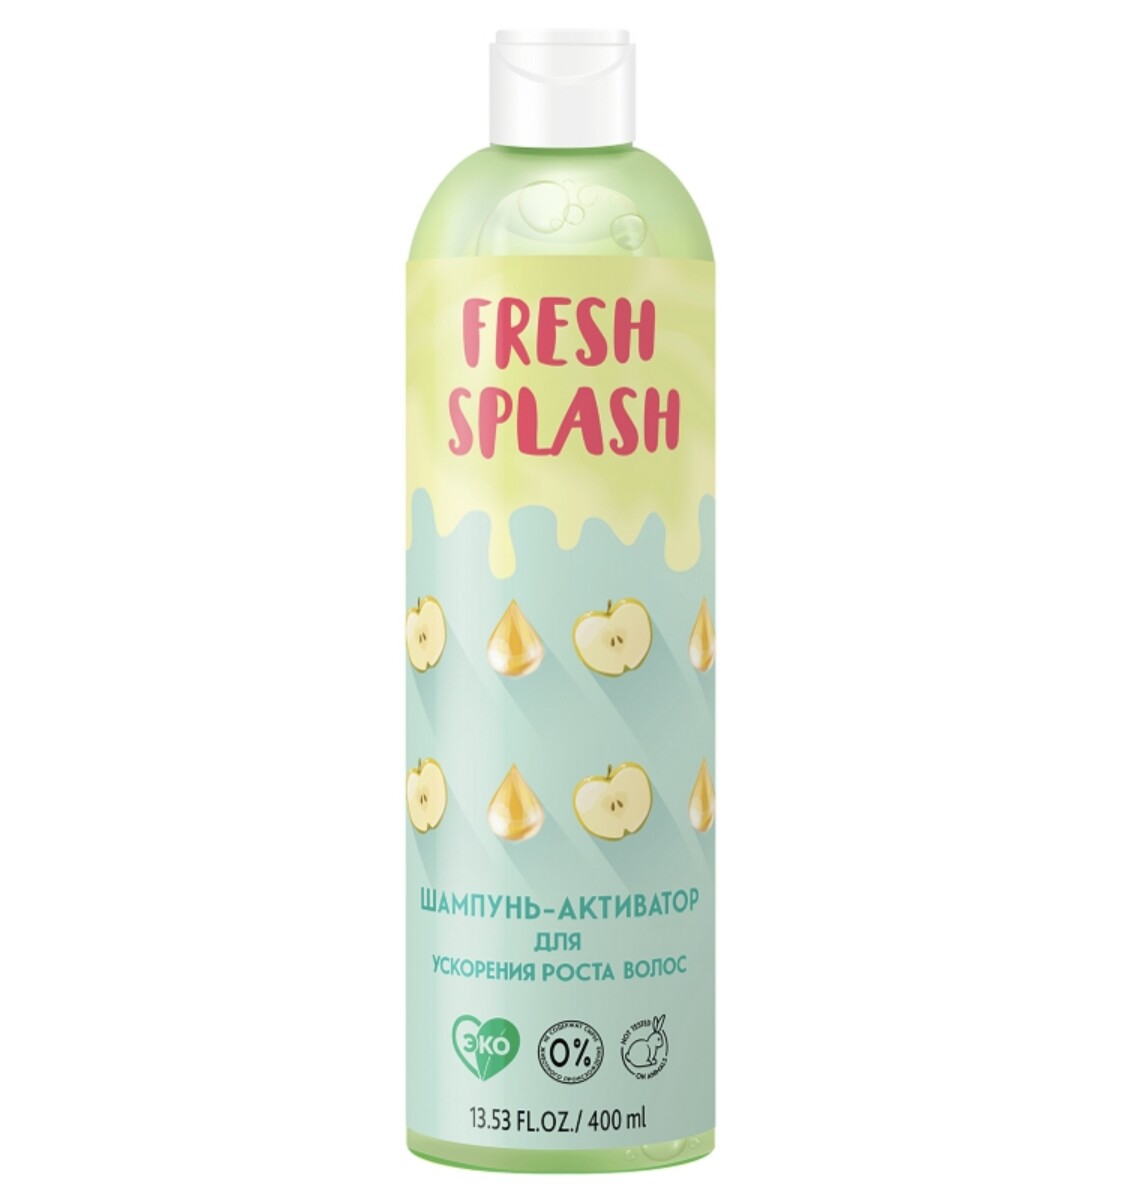 Fresh splash шампунь-активатор для ускорения роста волос, 400 мл splash page